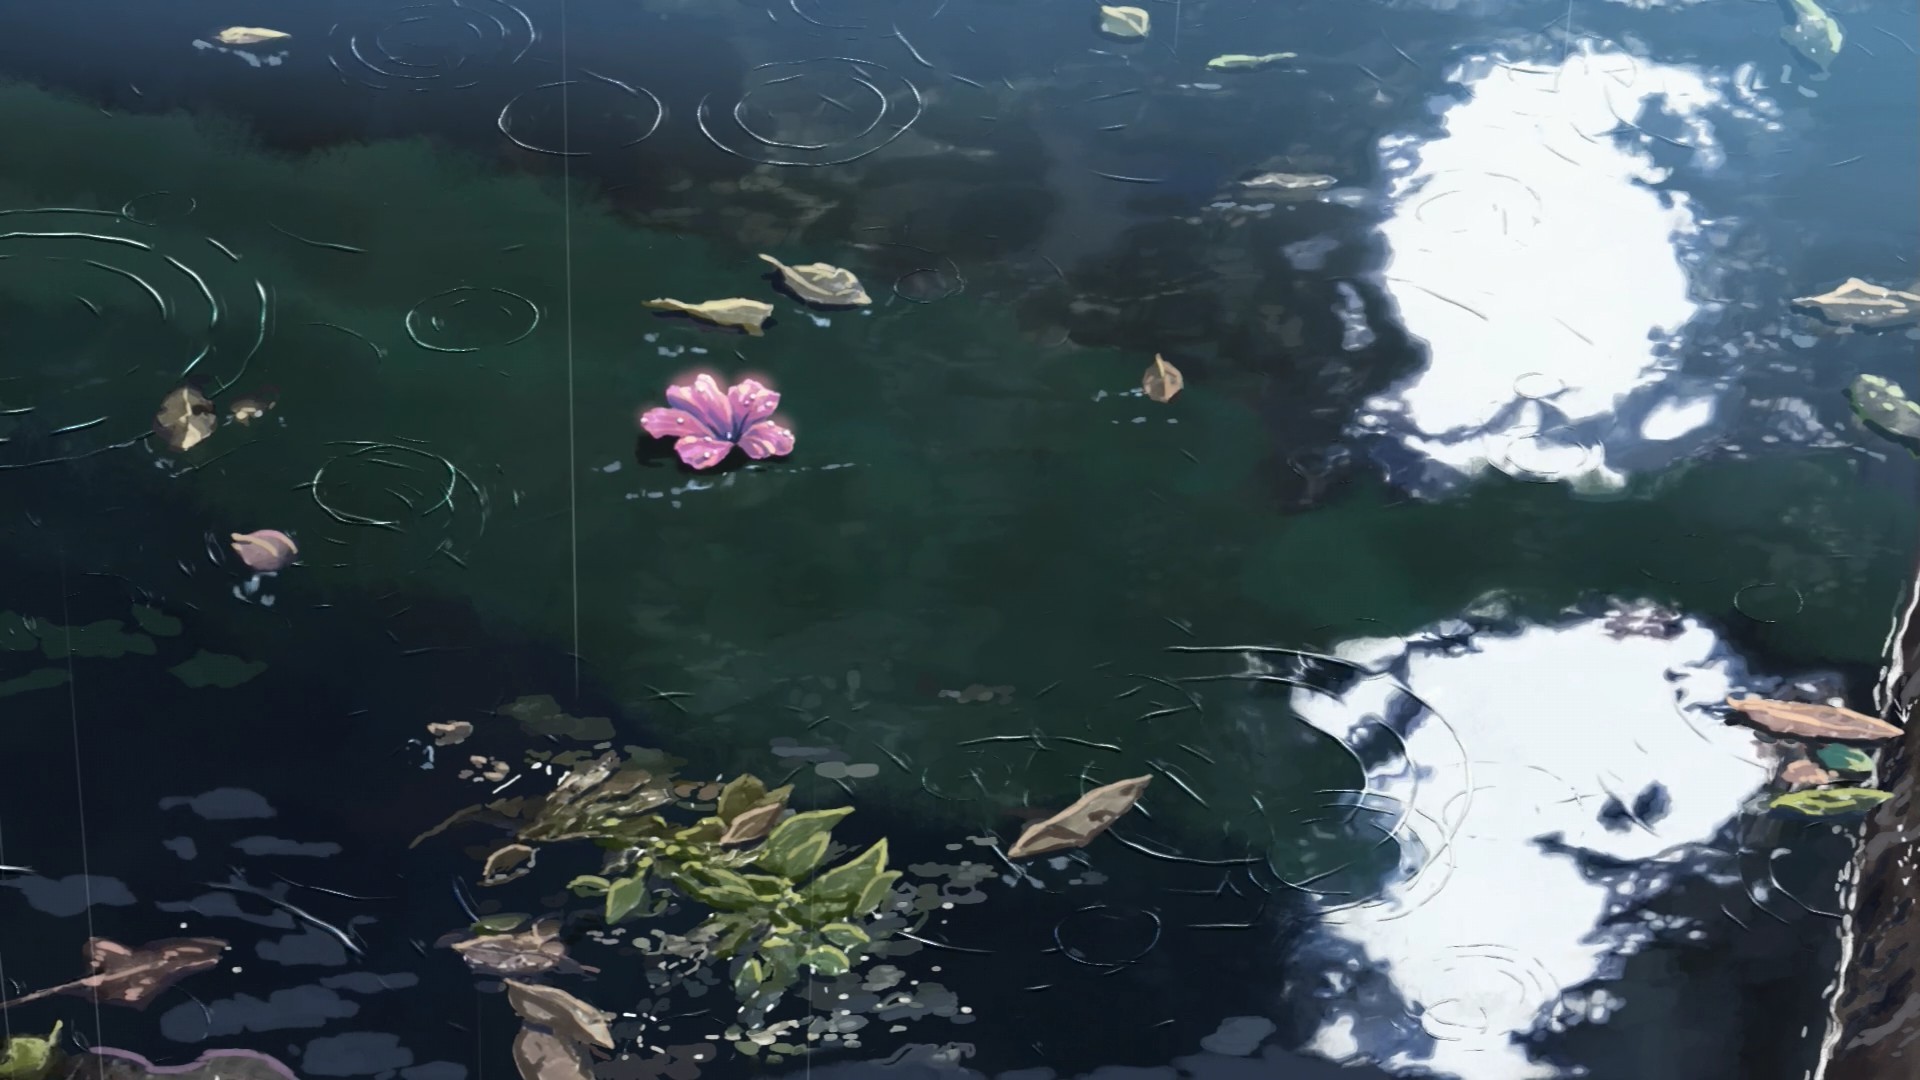 rain, The Garden Of Words, Makoto Shinkai, Water, Flowers, Sunlight